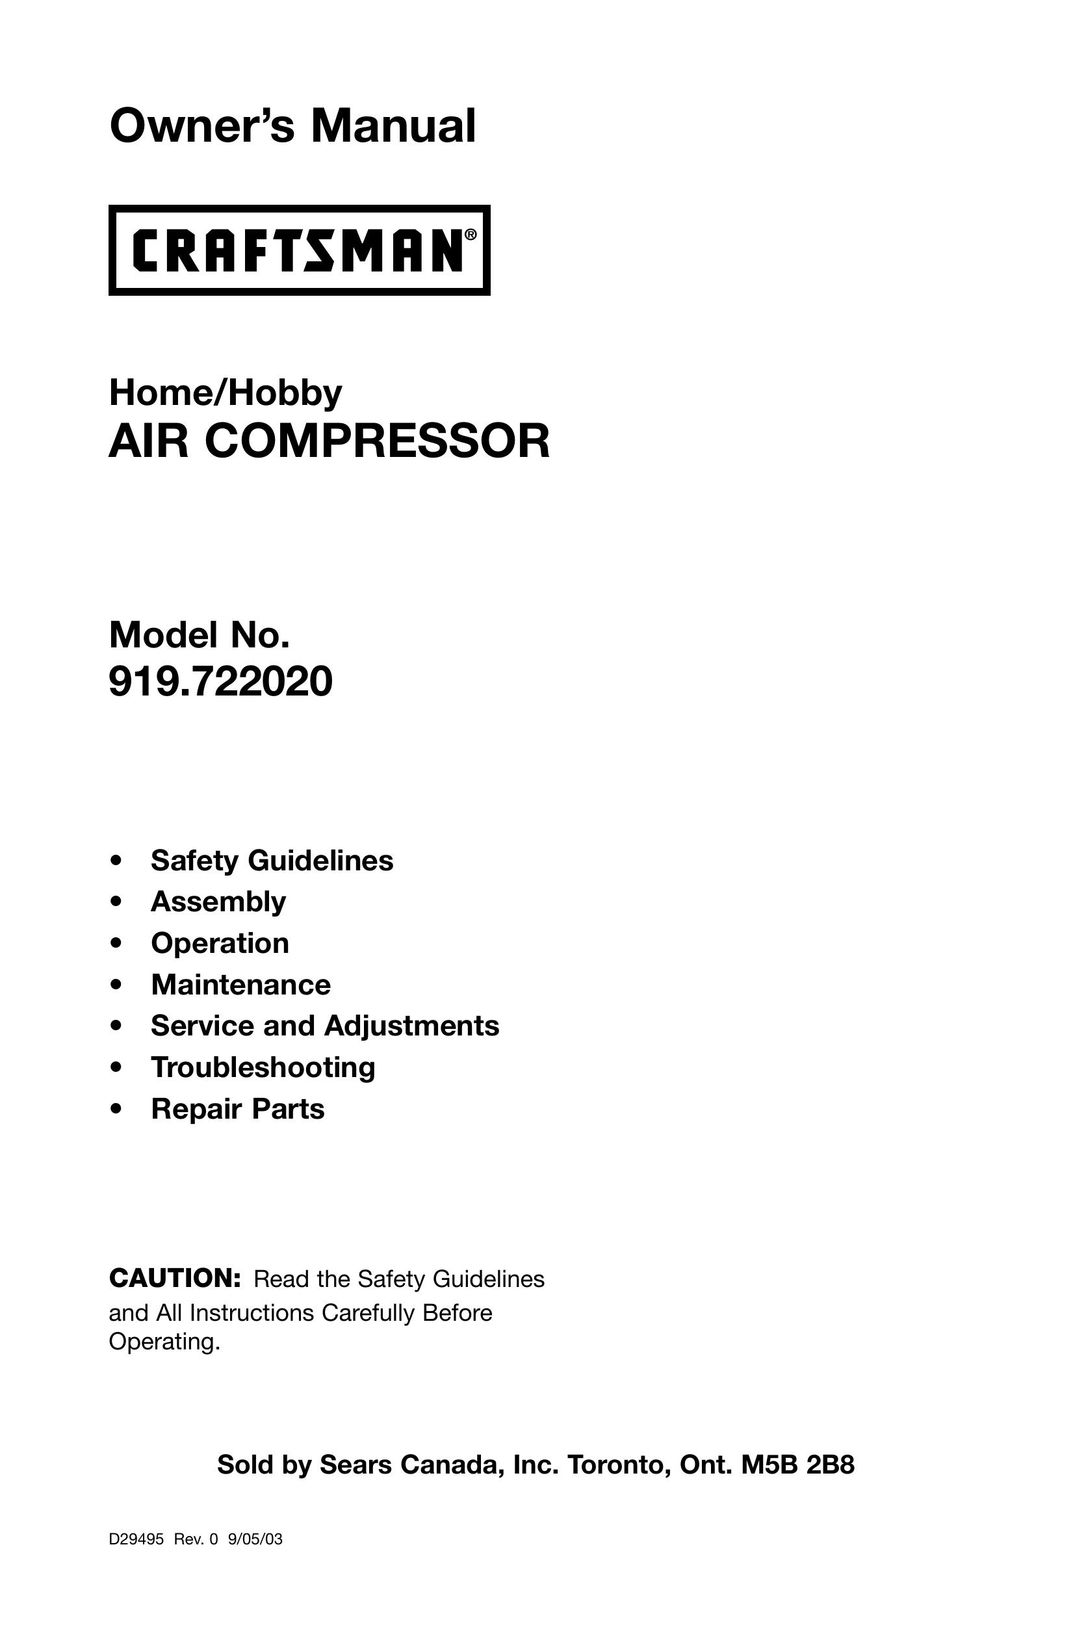 Craftsman 919.722020 Air Compressor User Manual